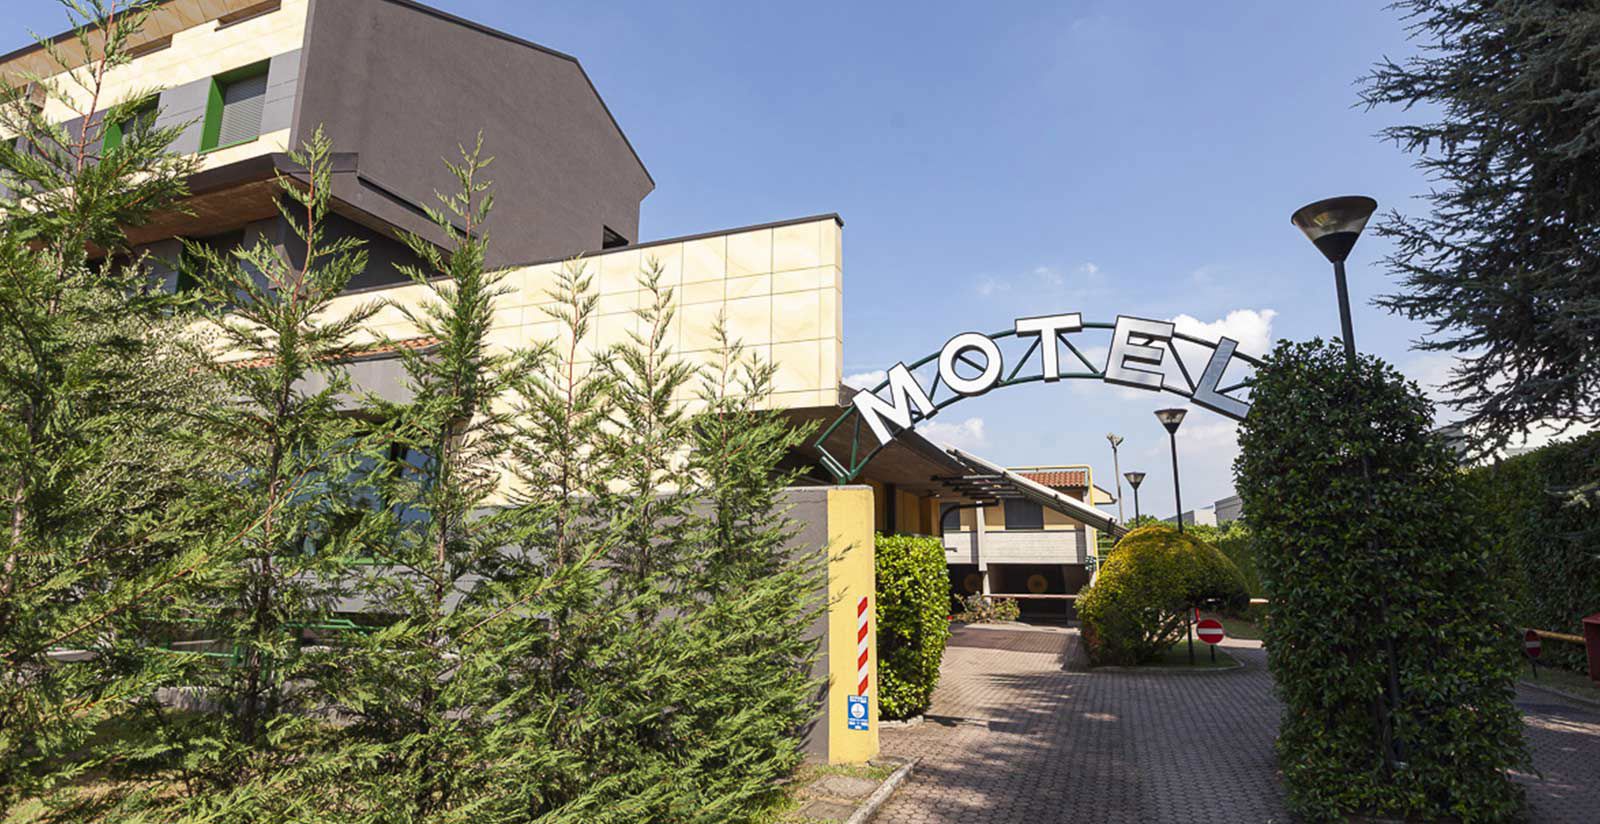 Hotel King - Location per meeting vicino Monza 4